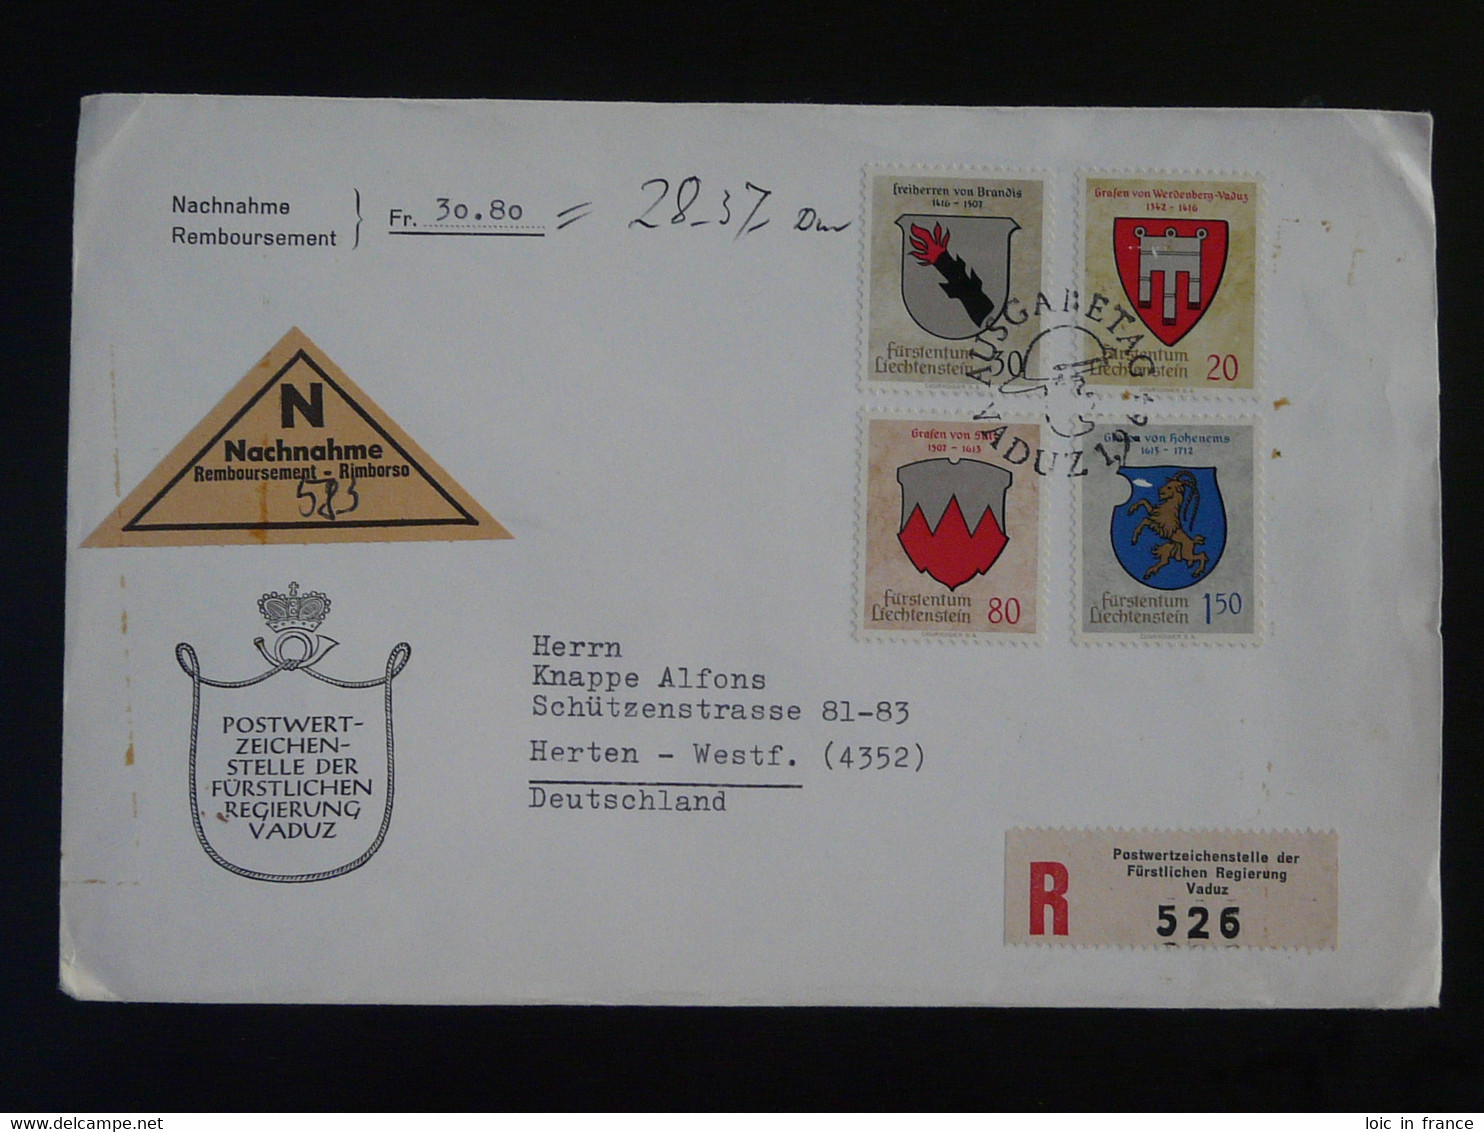 Lettre Recommandée Registered Cover Armoiries Coat Of Arm Liechtenstein 1964 - Briefe U. Dokumente